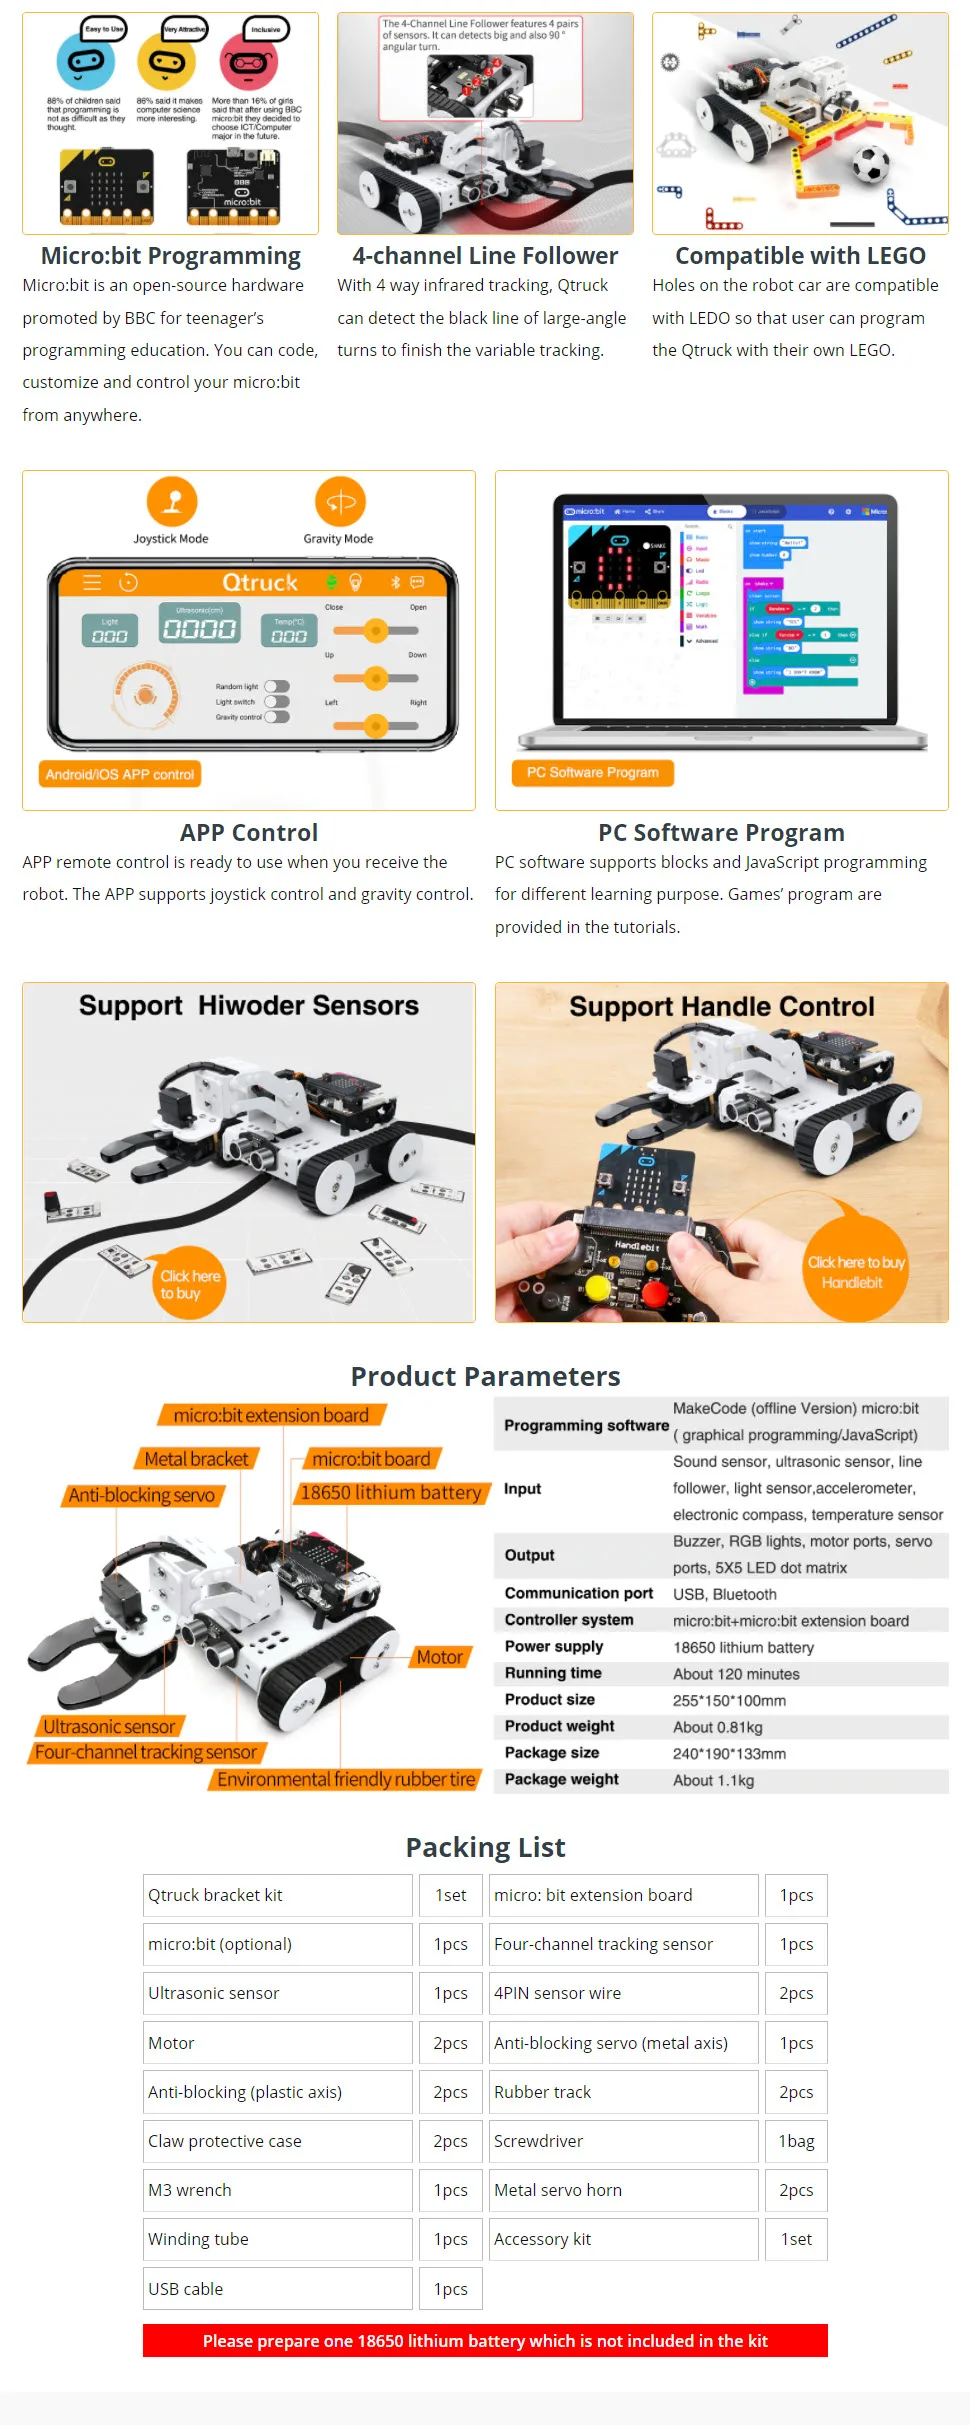 qtruck programmable educational robot: hiwonder micro:bit